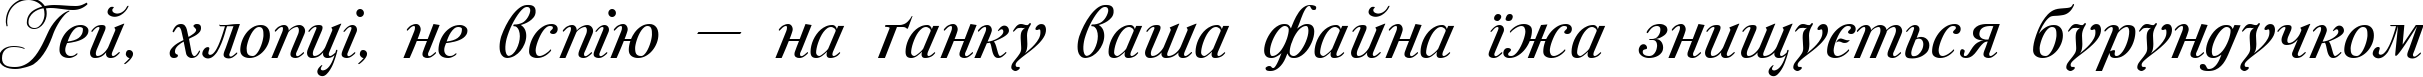 Пример написания шрифтом Mon Amour Two Medium текста на украинском